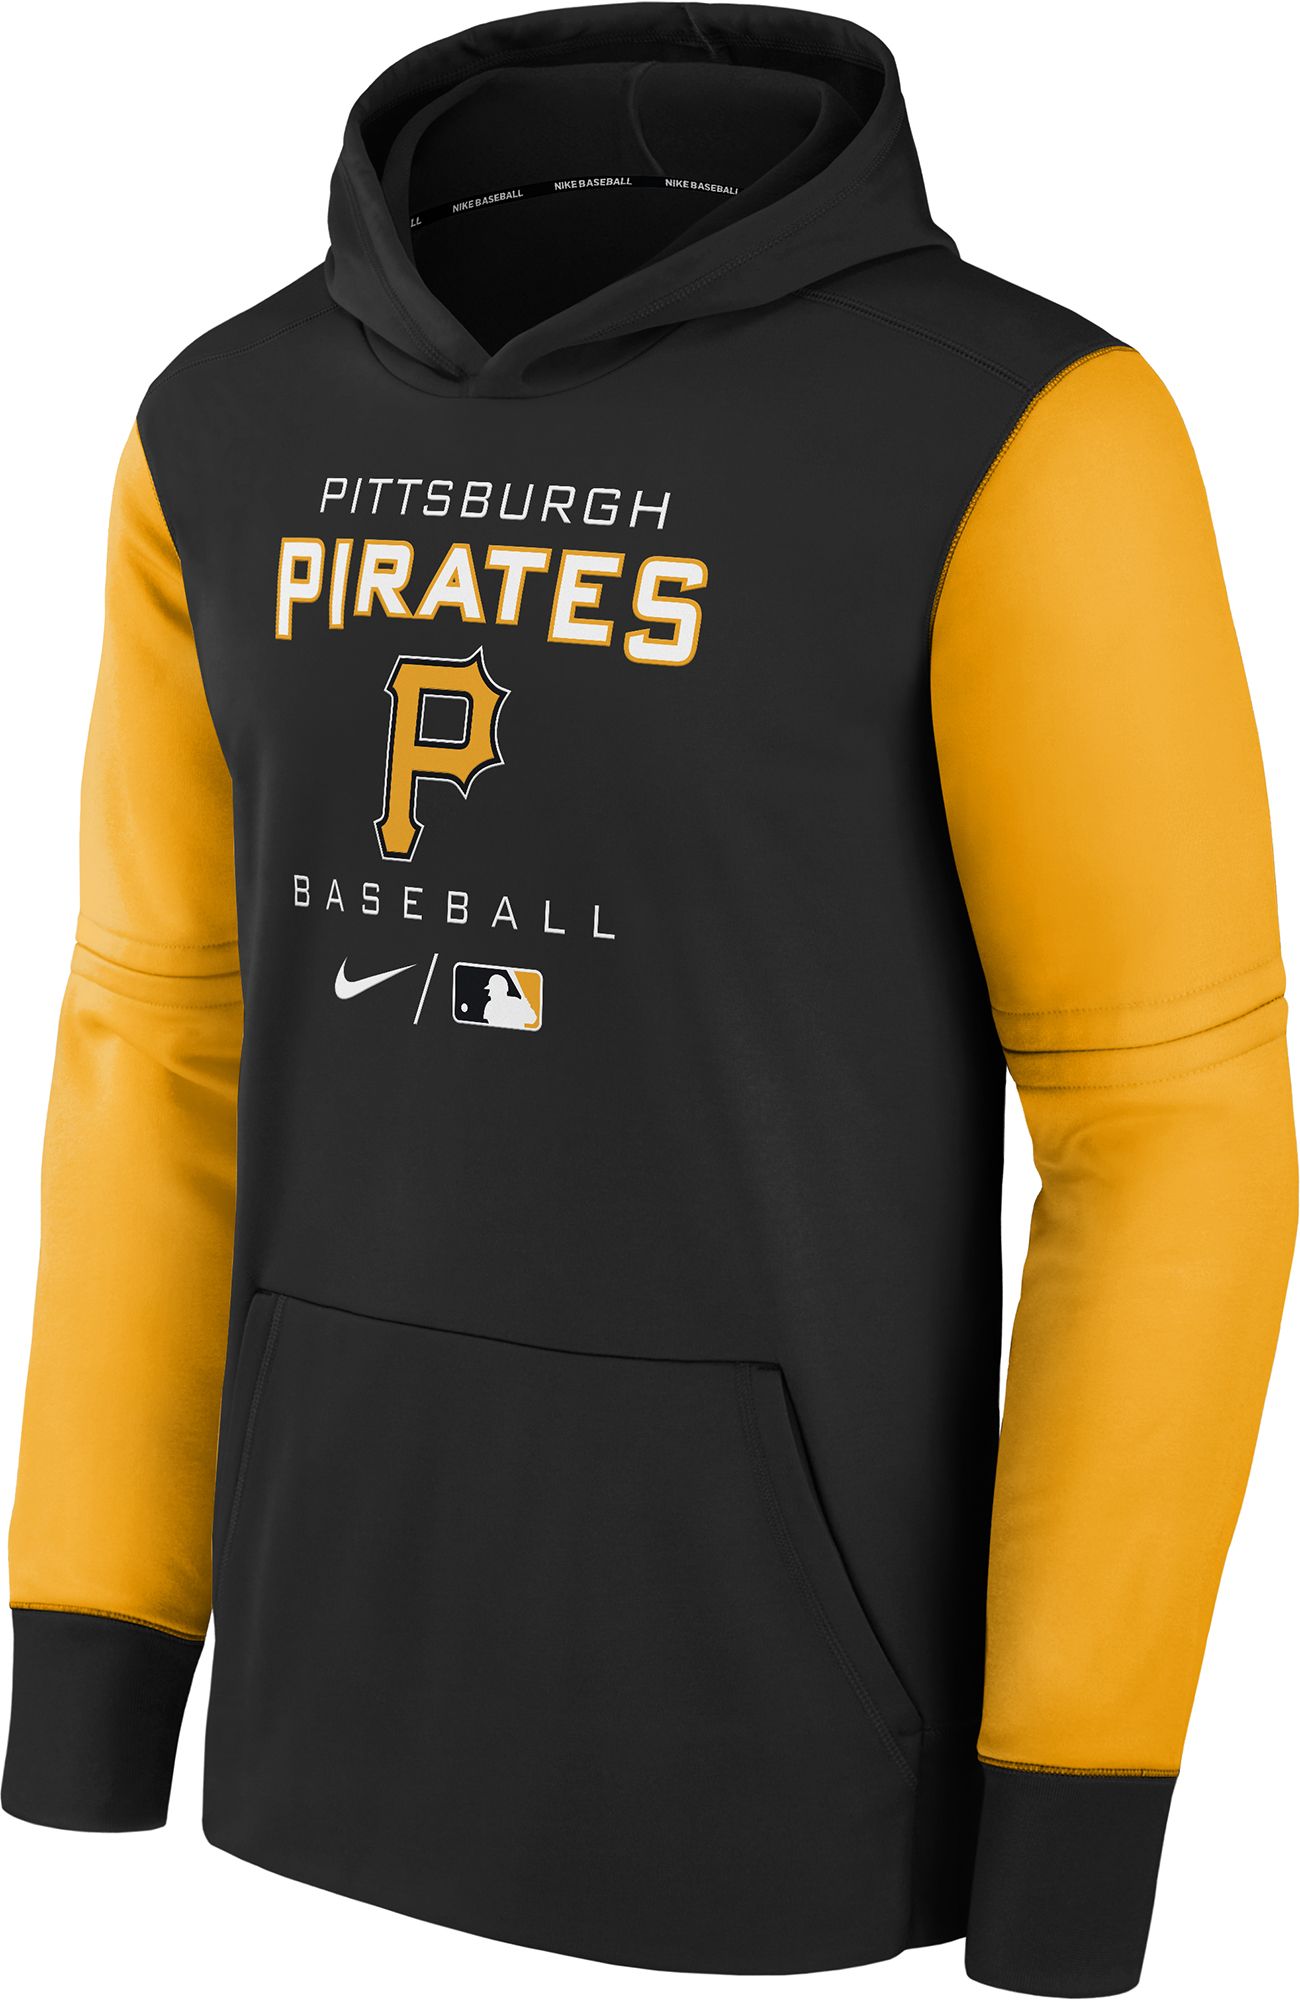 Youth Pittsburgh Pirates Ke'Bryan Hayes #13 Yellow T-Shirt